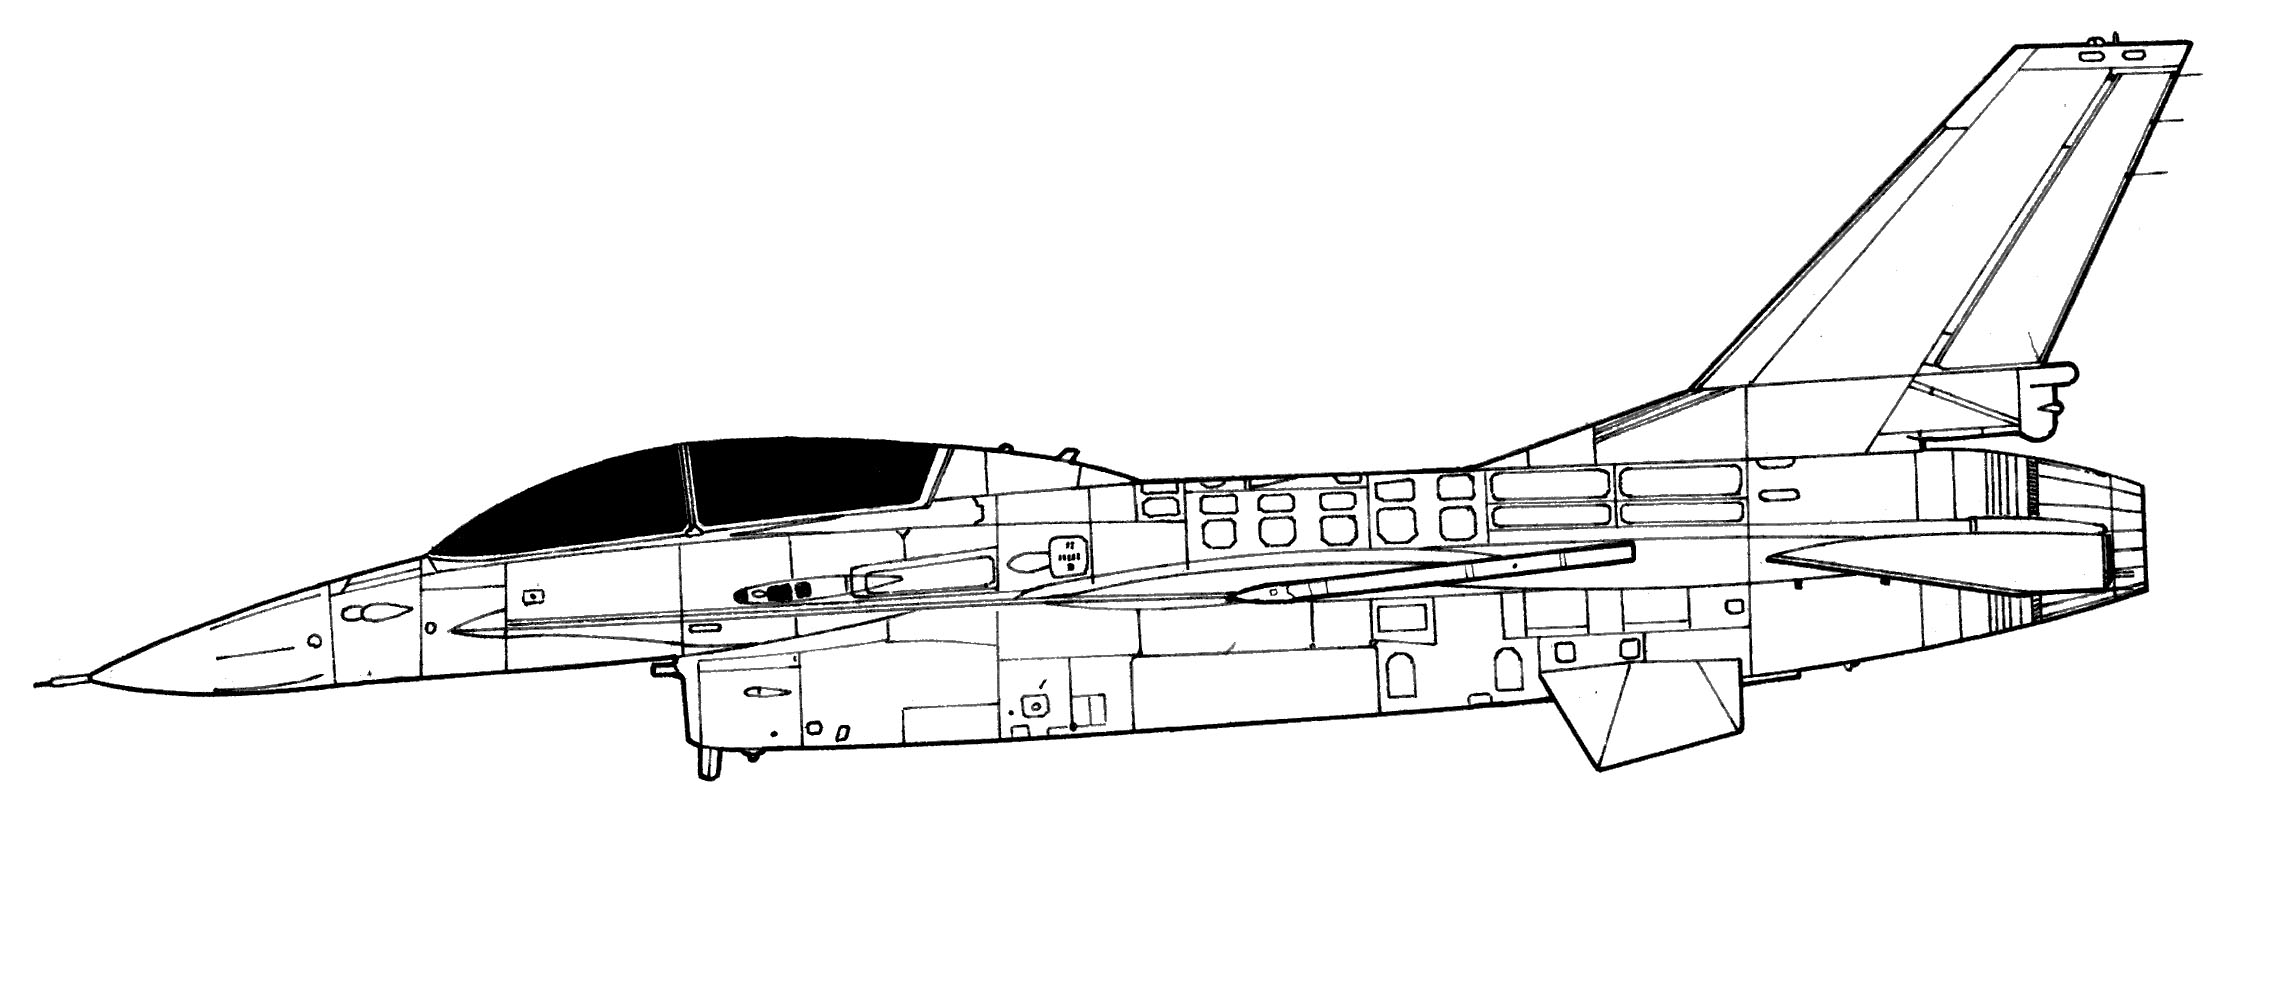 F Fighting Falcon Blueprint - F 16 Drawing. 